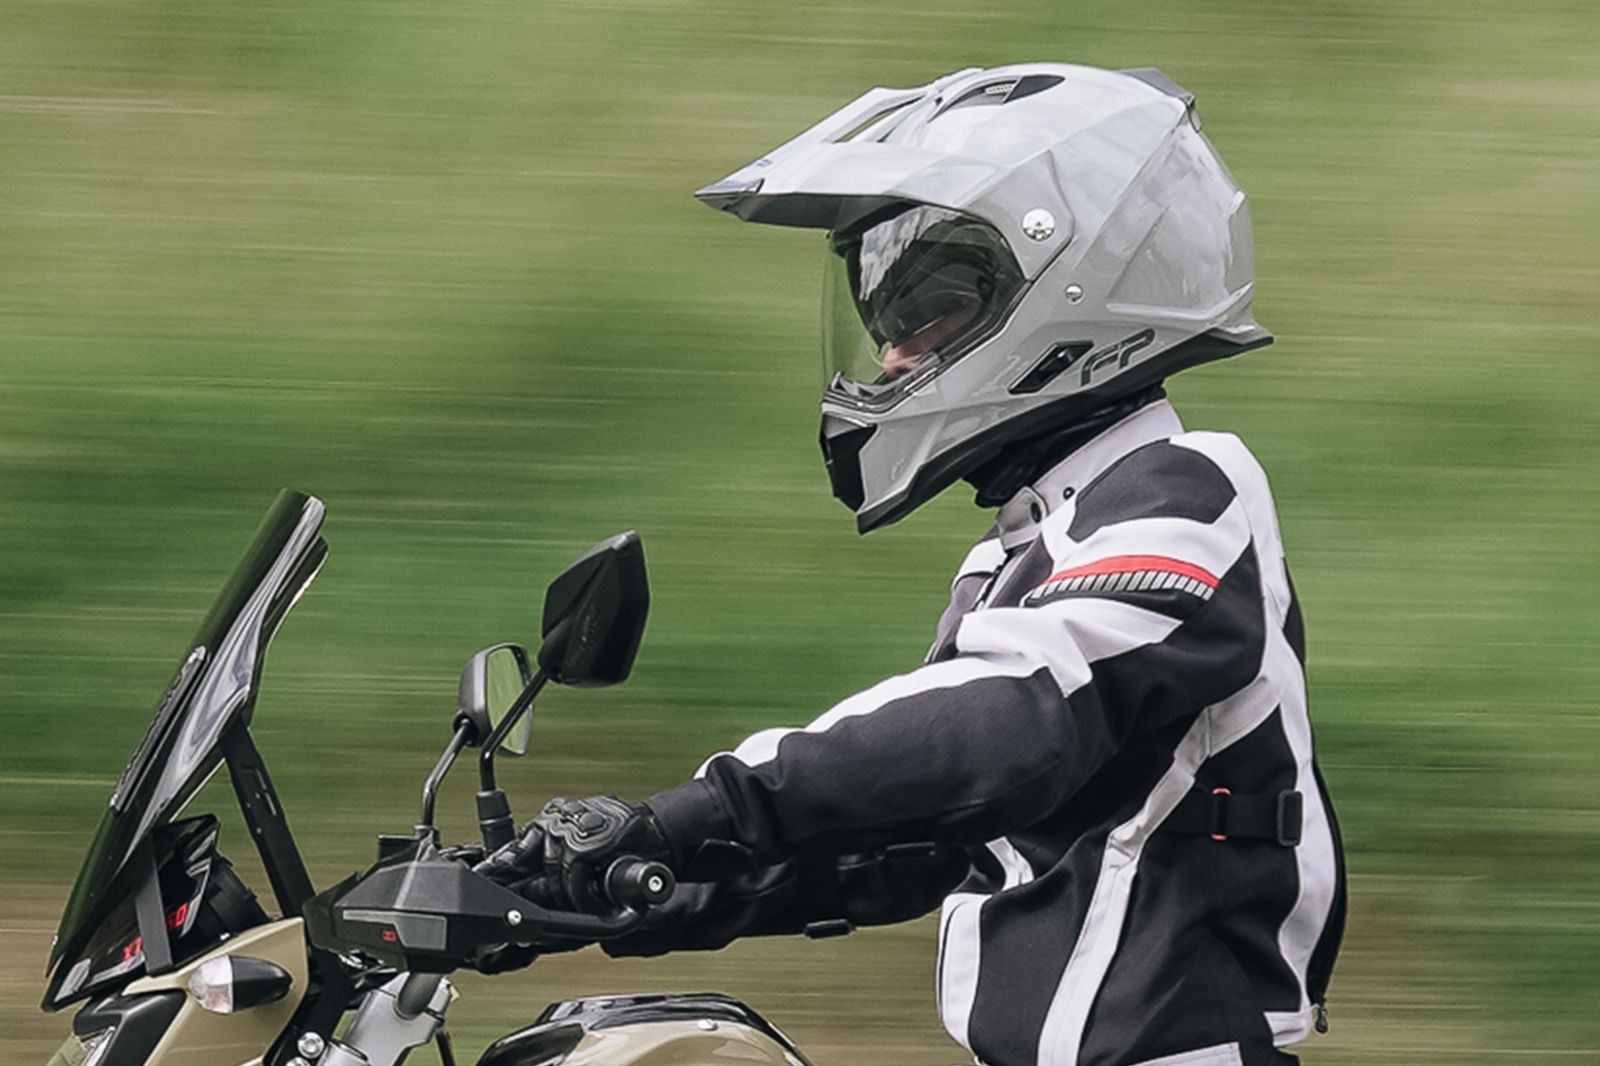 Cascos para moto: ¿Qué tipo de casco se debe usar en Colombia